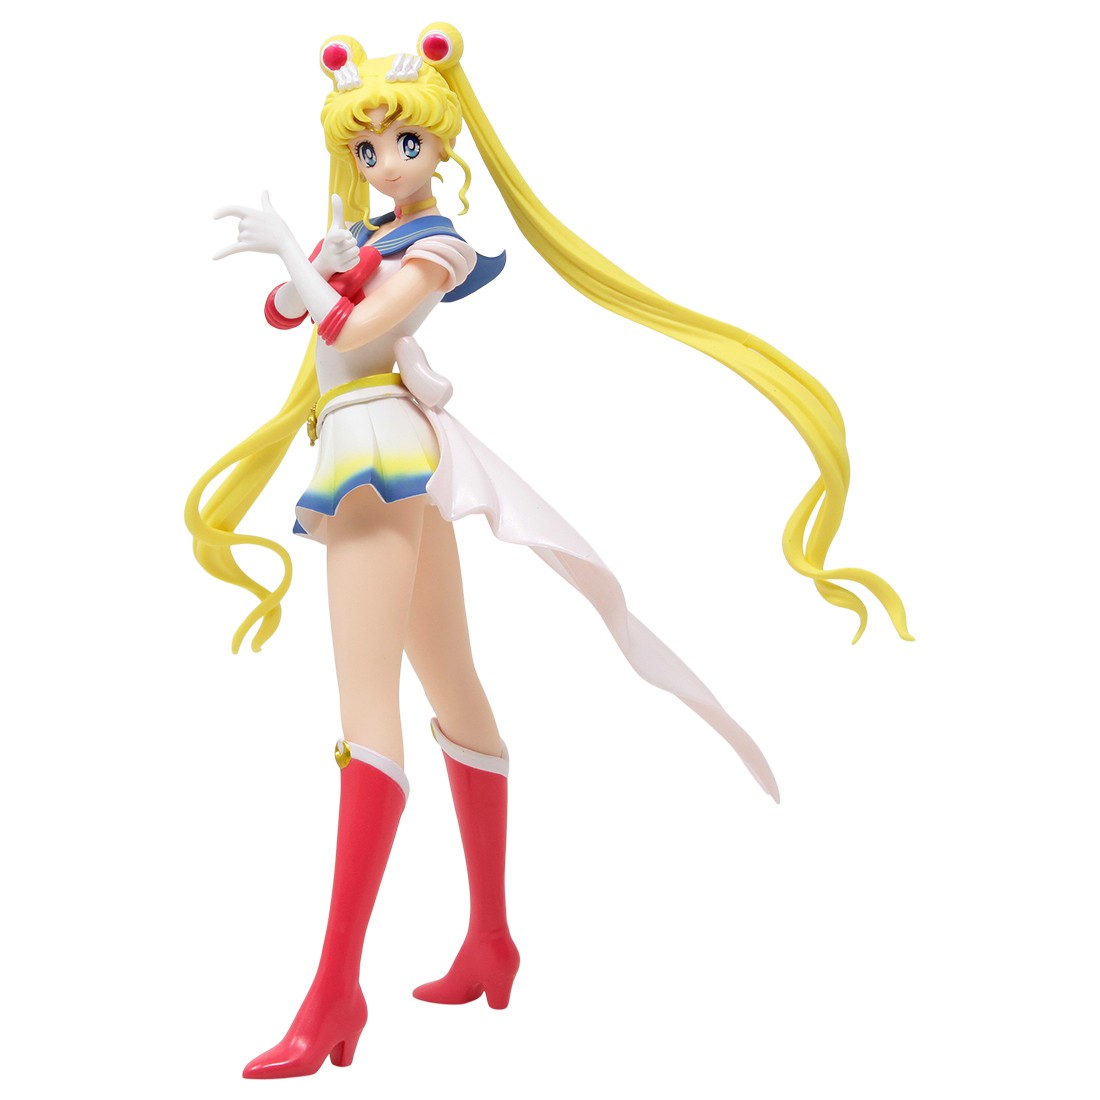 SUPER SAILOR MOON "Pretty Guardian Sailor Moon ETERNAL" figure 23cm Banpresto A